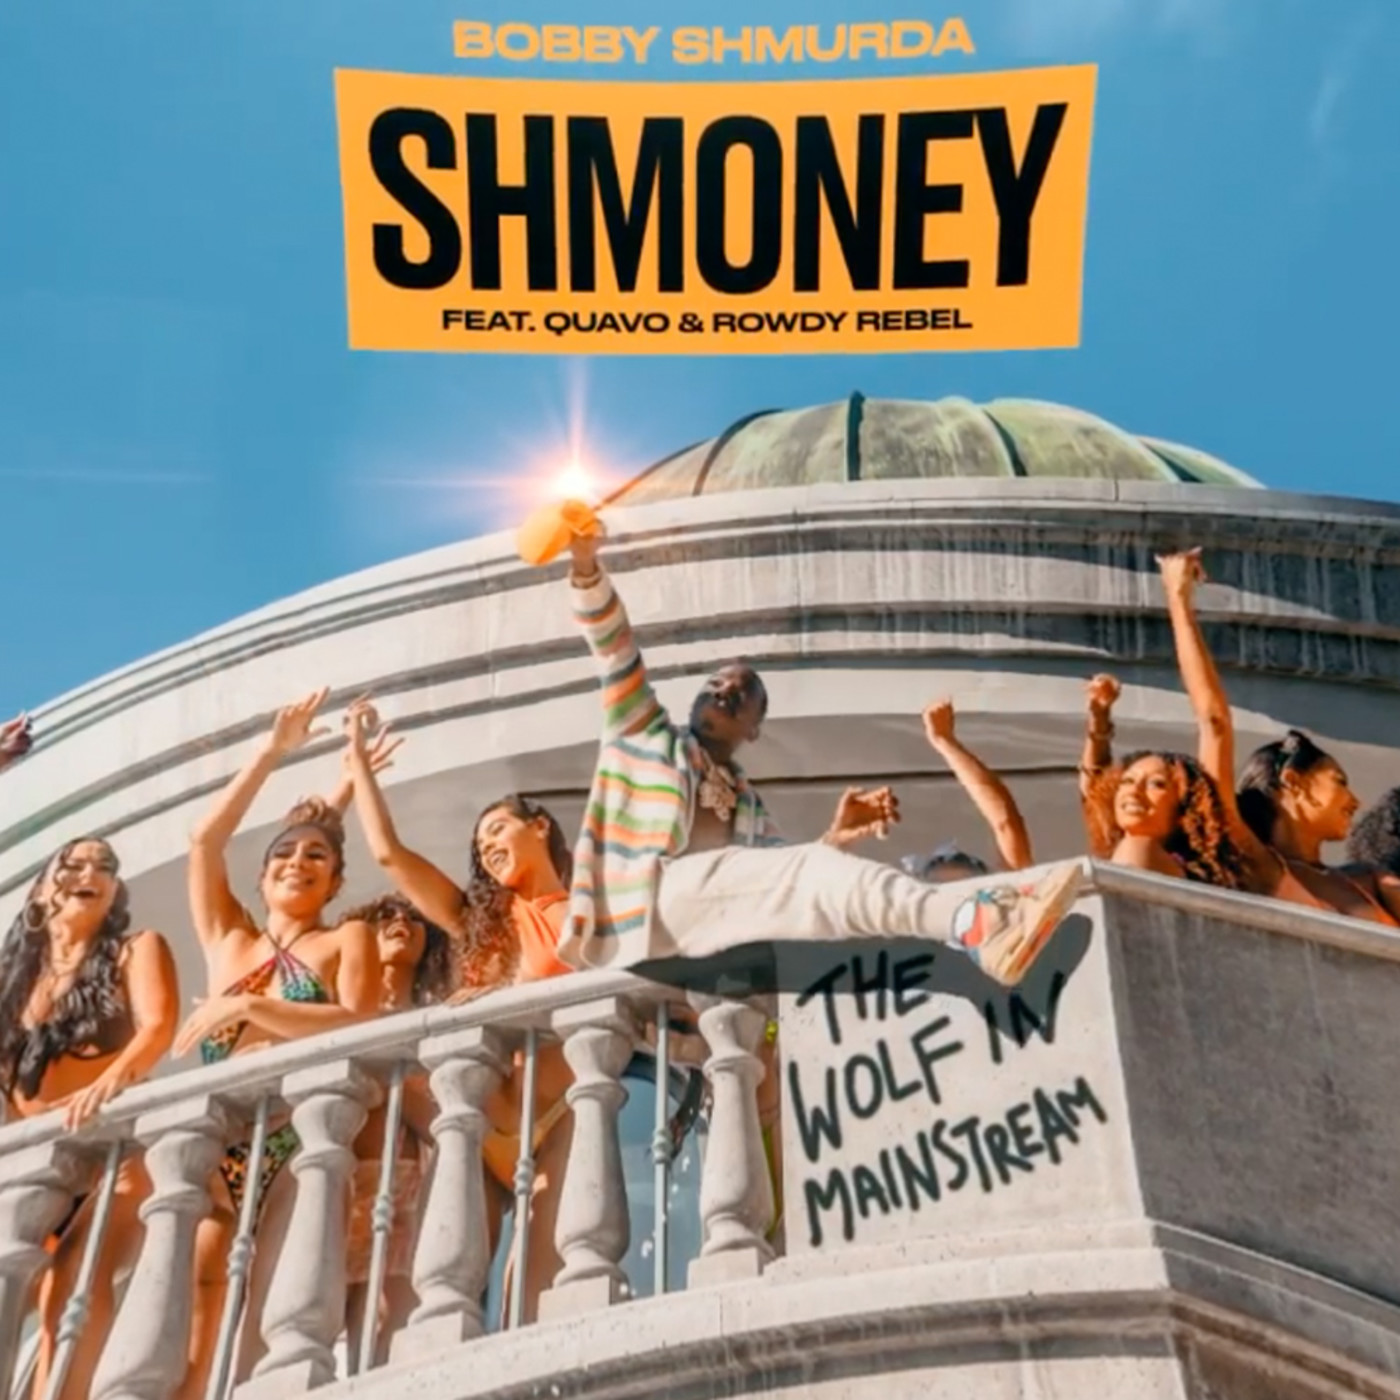 Bobby Shmurda Calls On Rowdy Rebel & Quavo For “Shmoney”